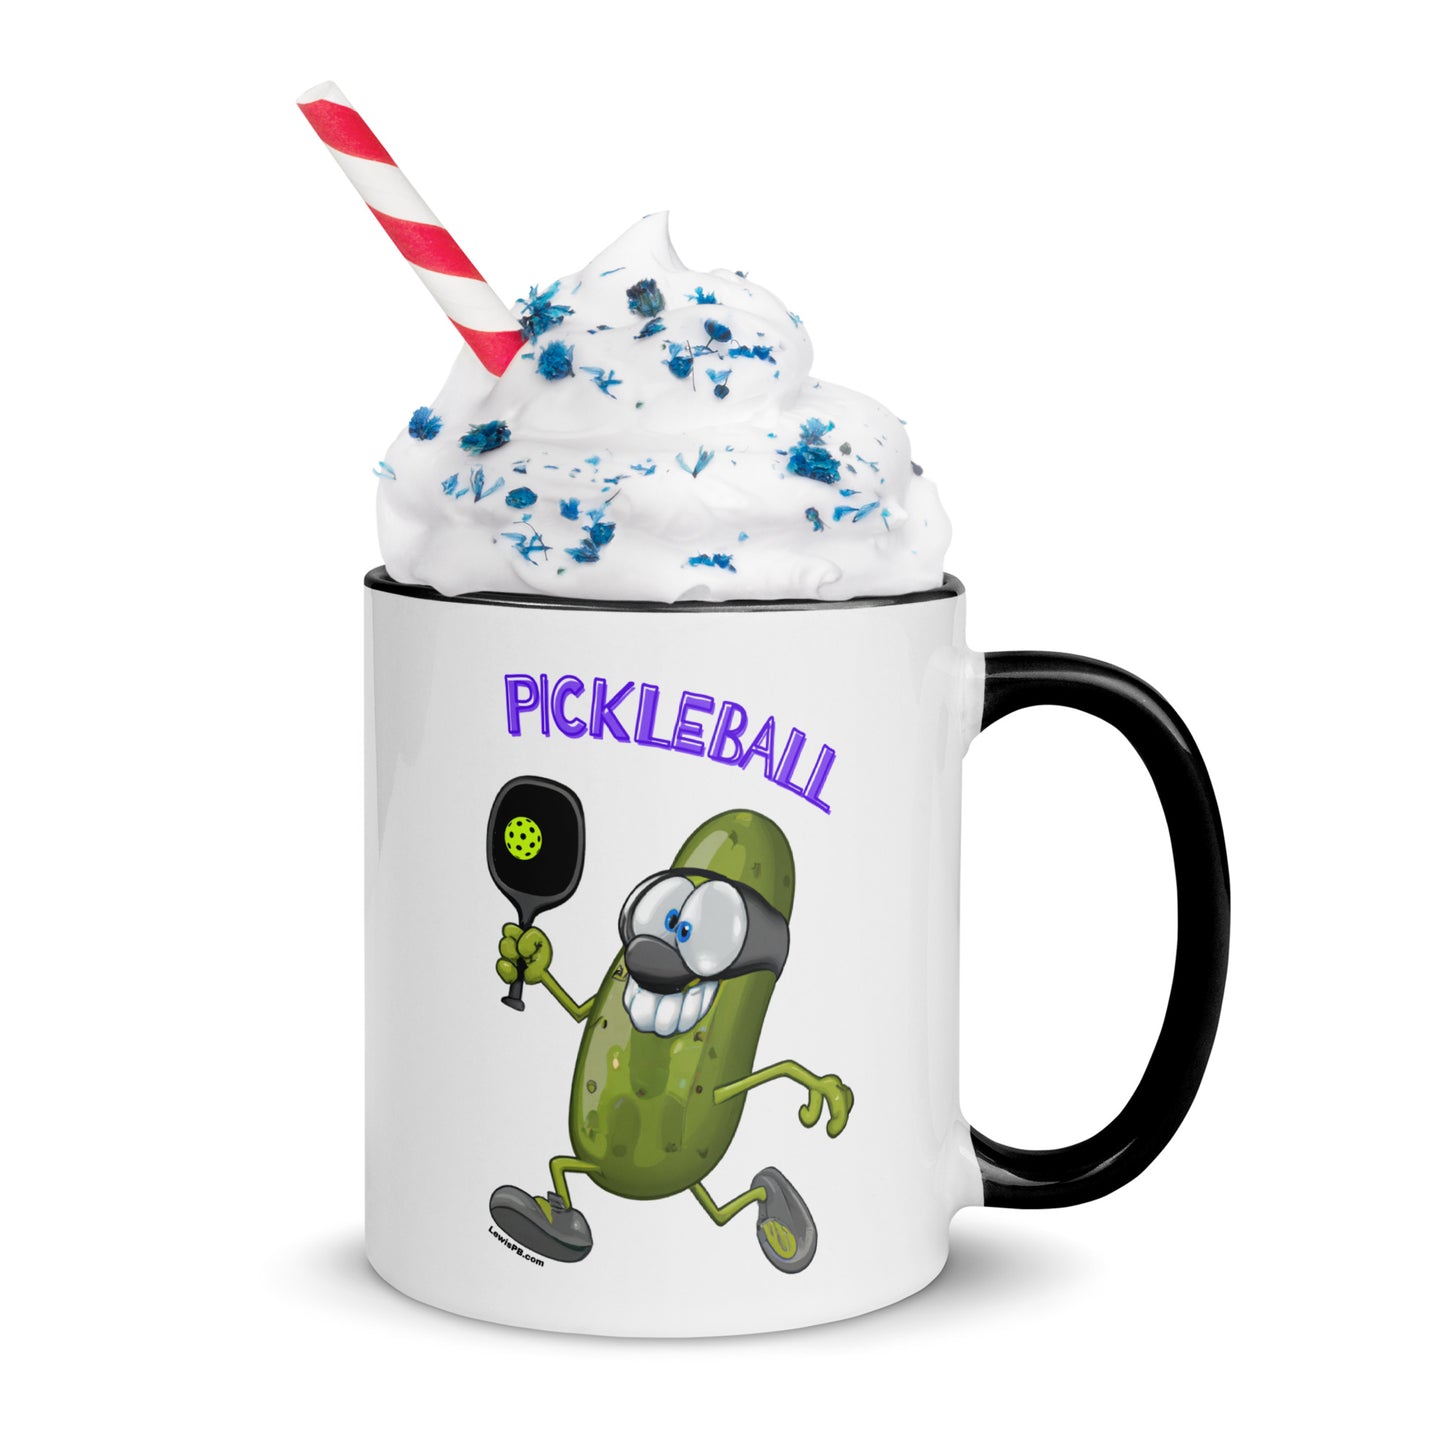 Pickleball Mug | "Pickle"